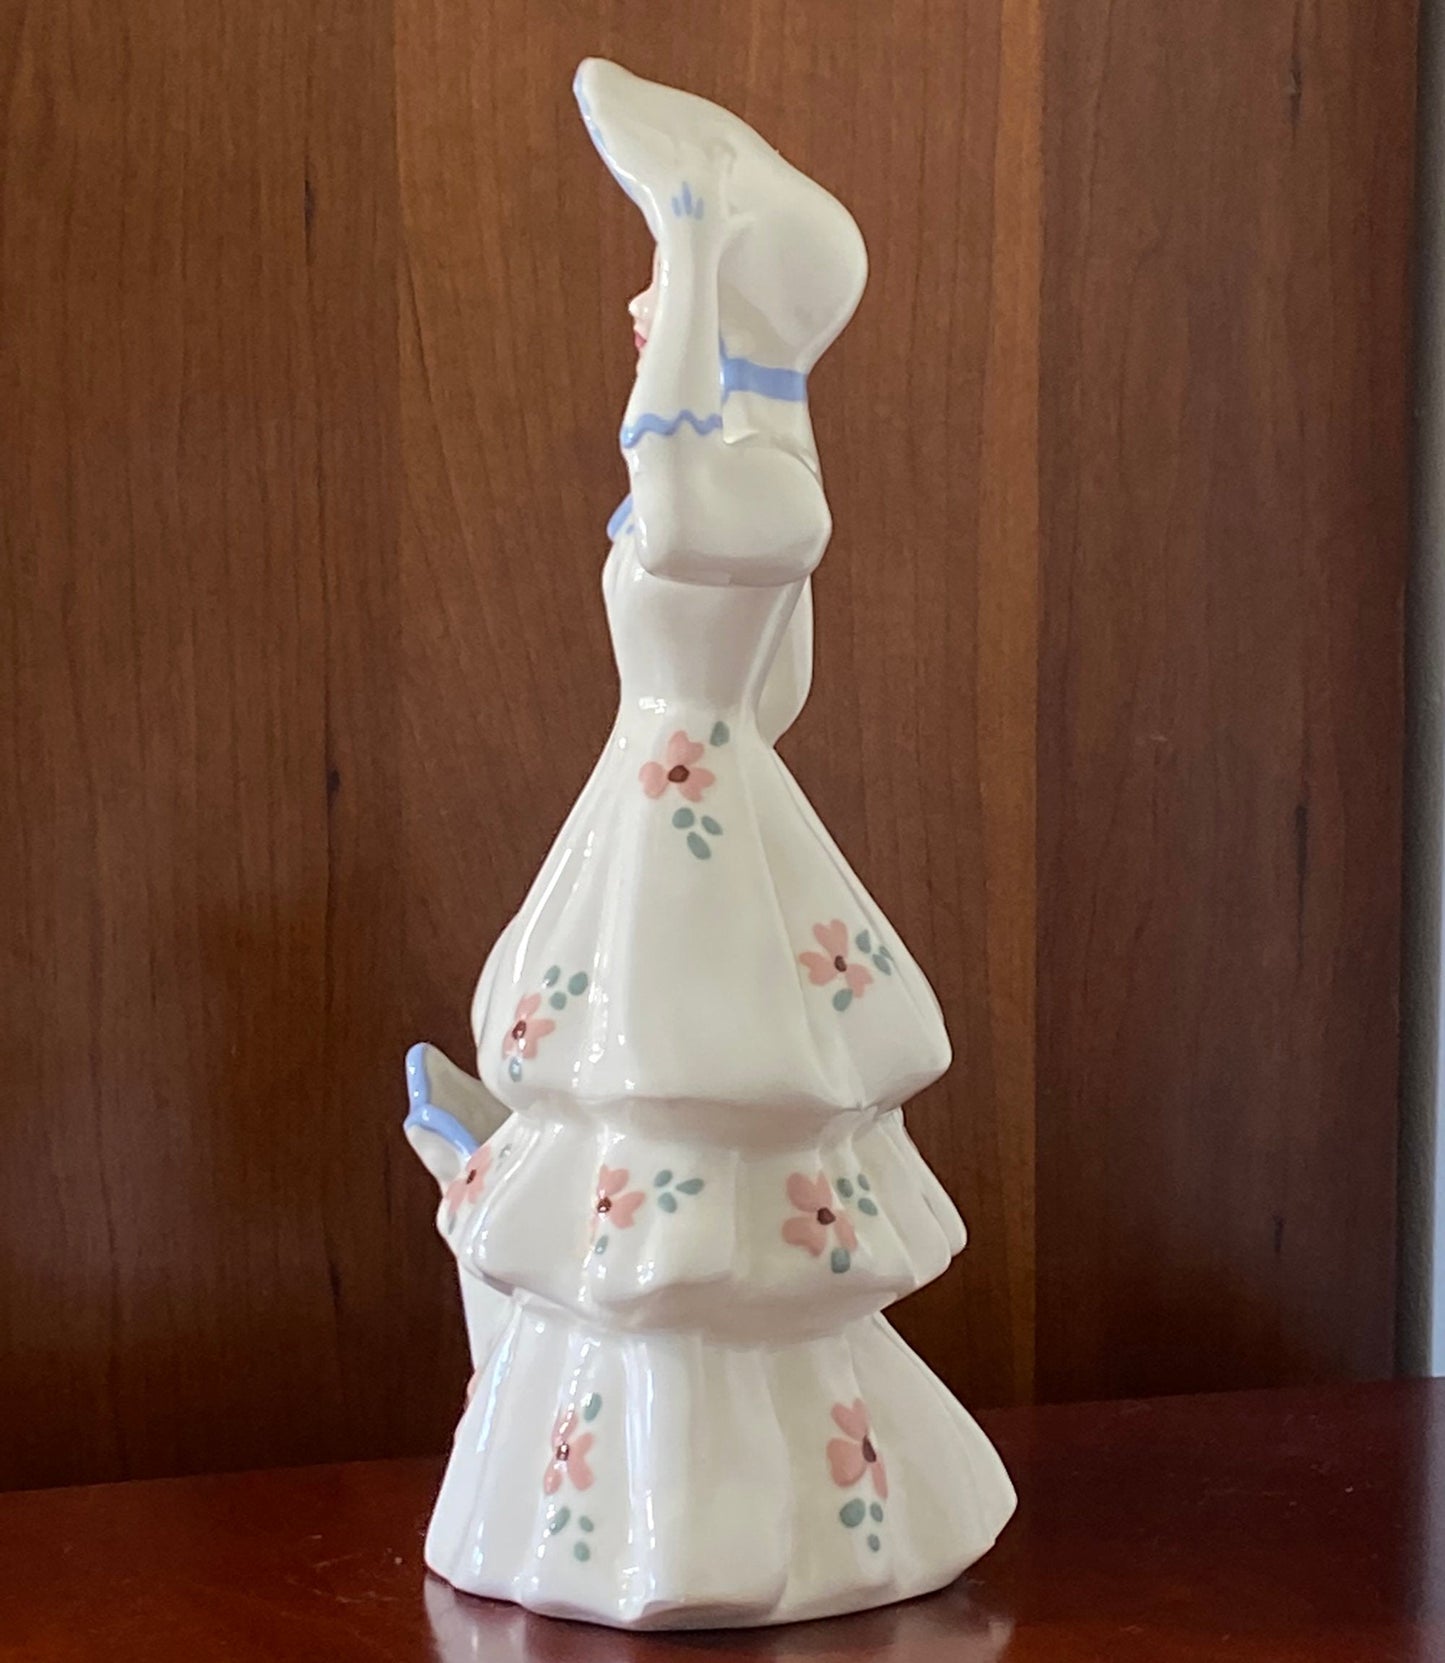 florence-ceramics-lady-emily-figurine-side view